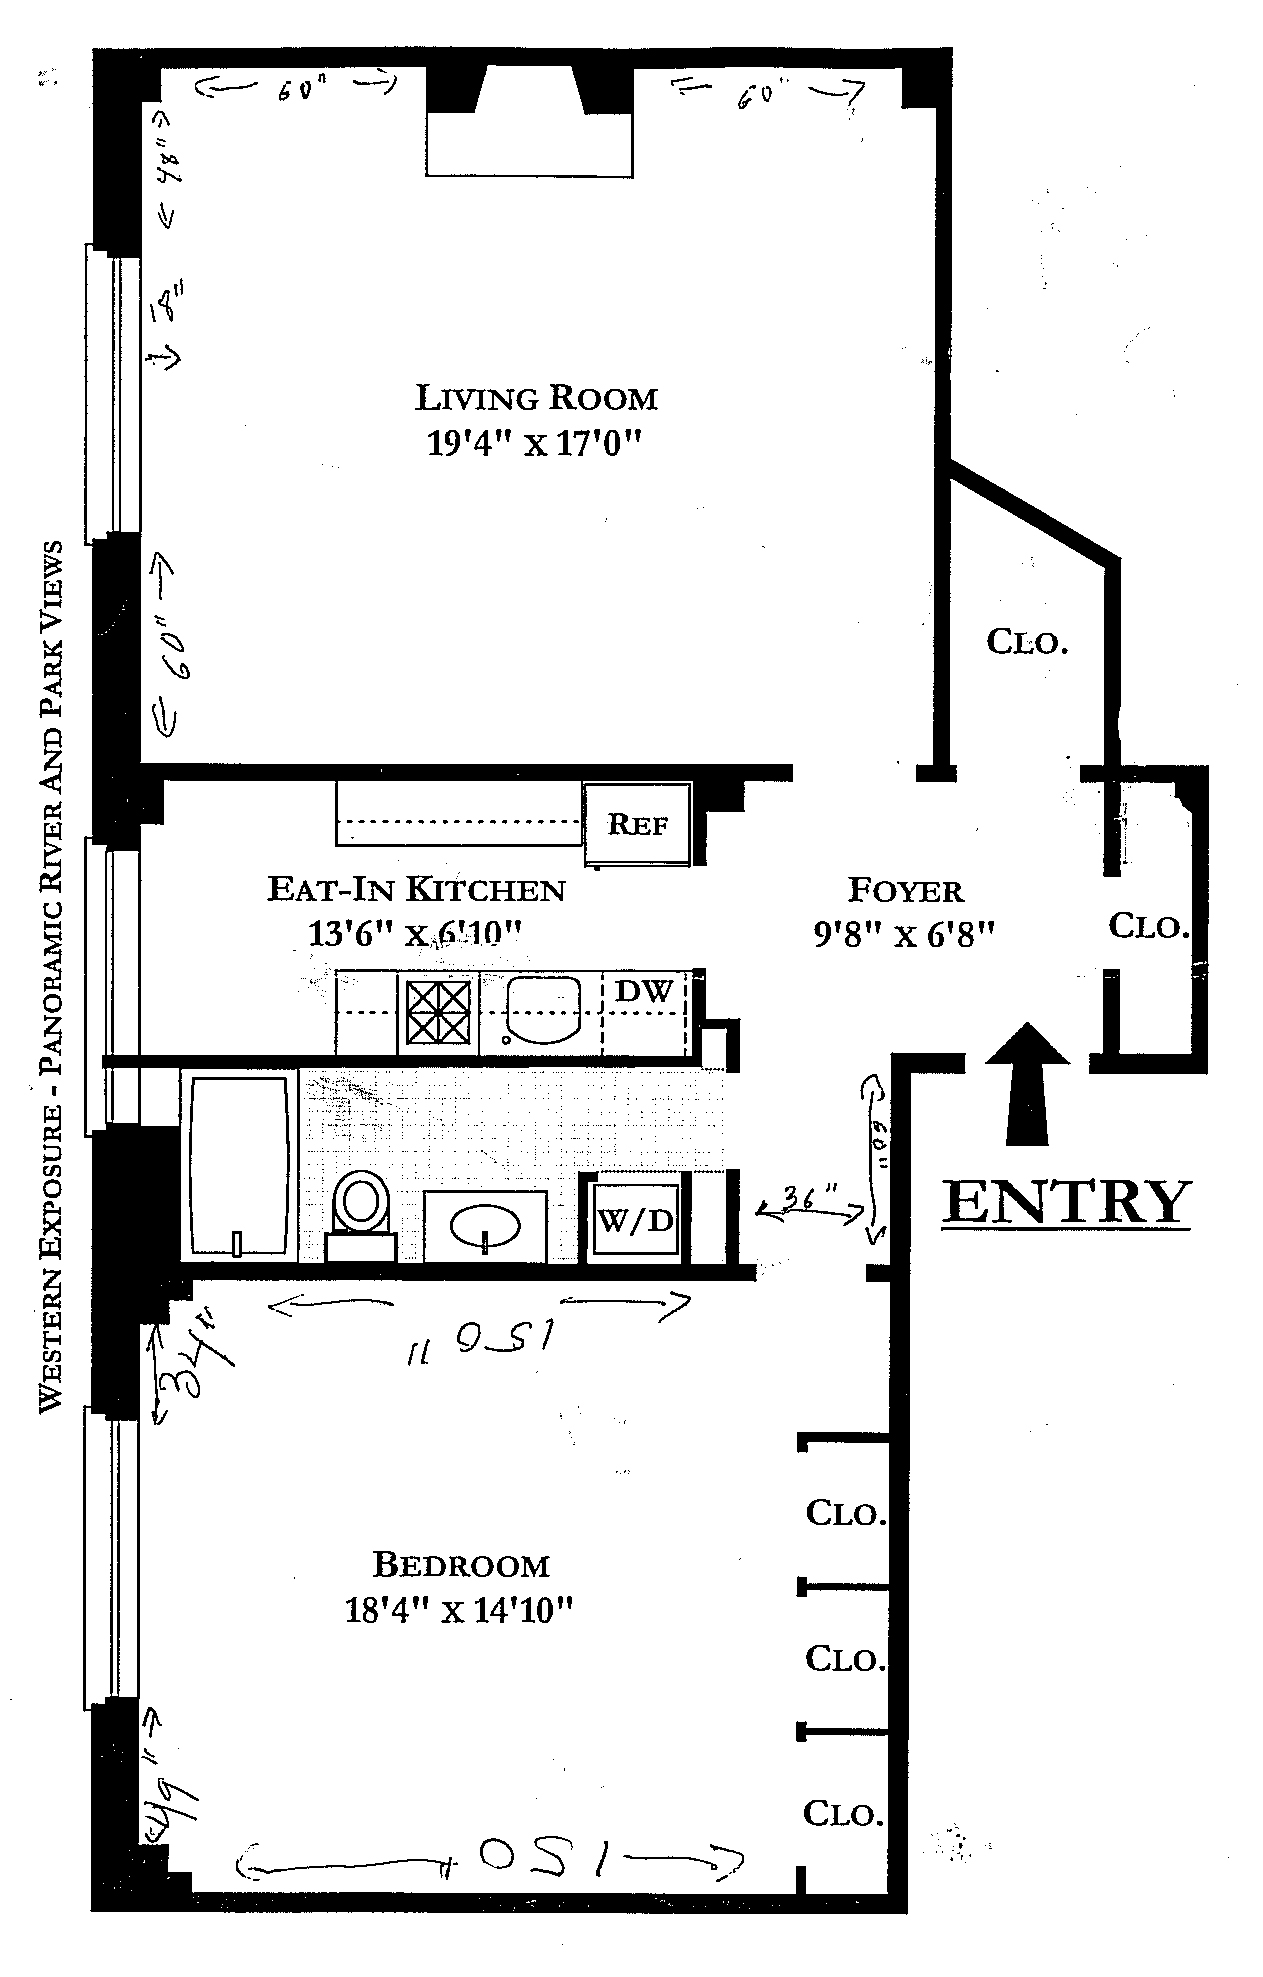 Floorplan for 210 Riverside Drive